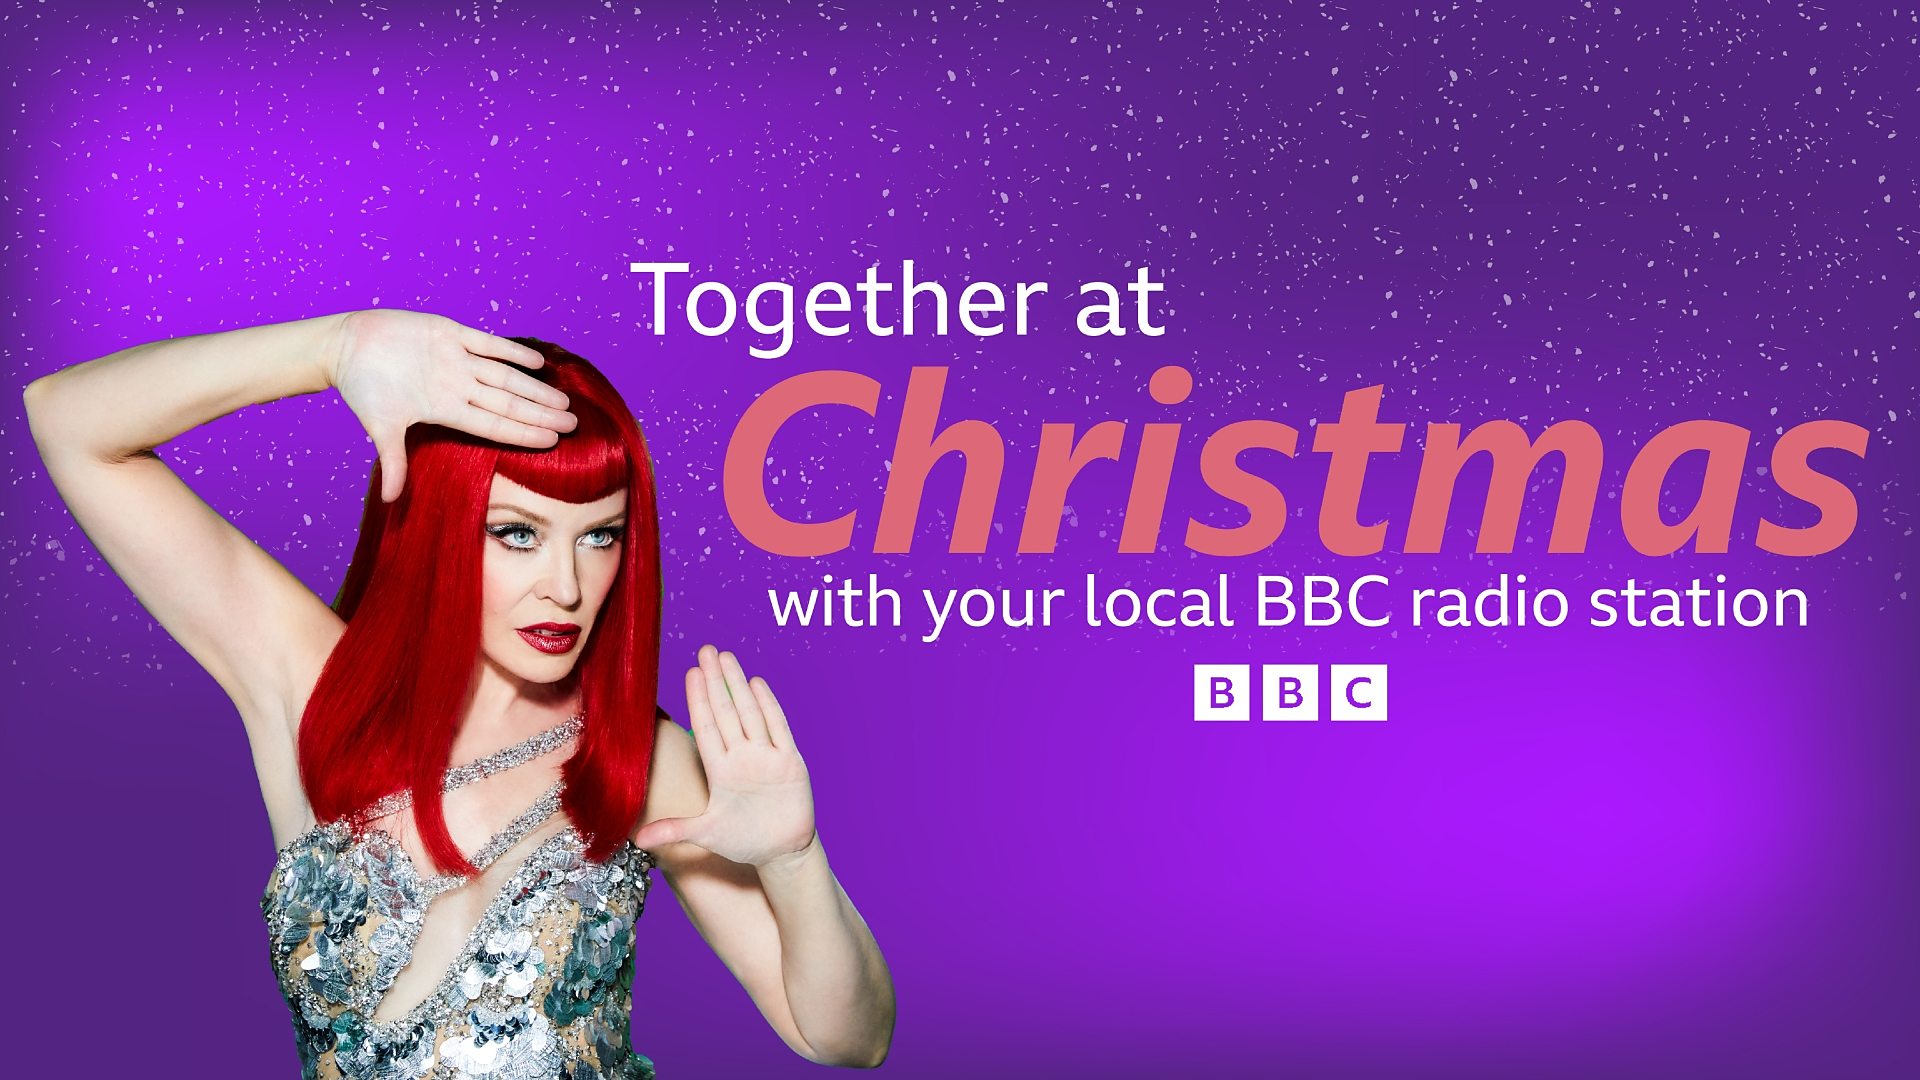 This Christmas, pop sensation Kylie Minogue thanks BBC Make a ...